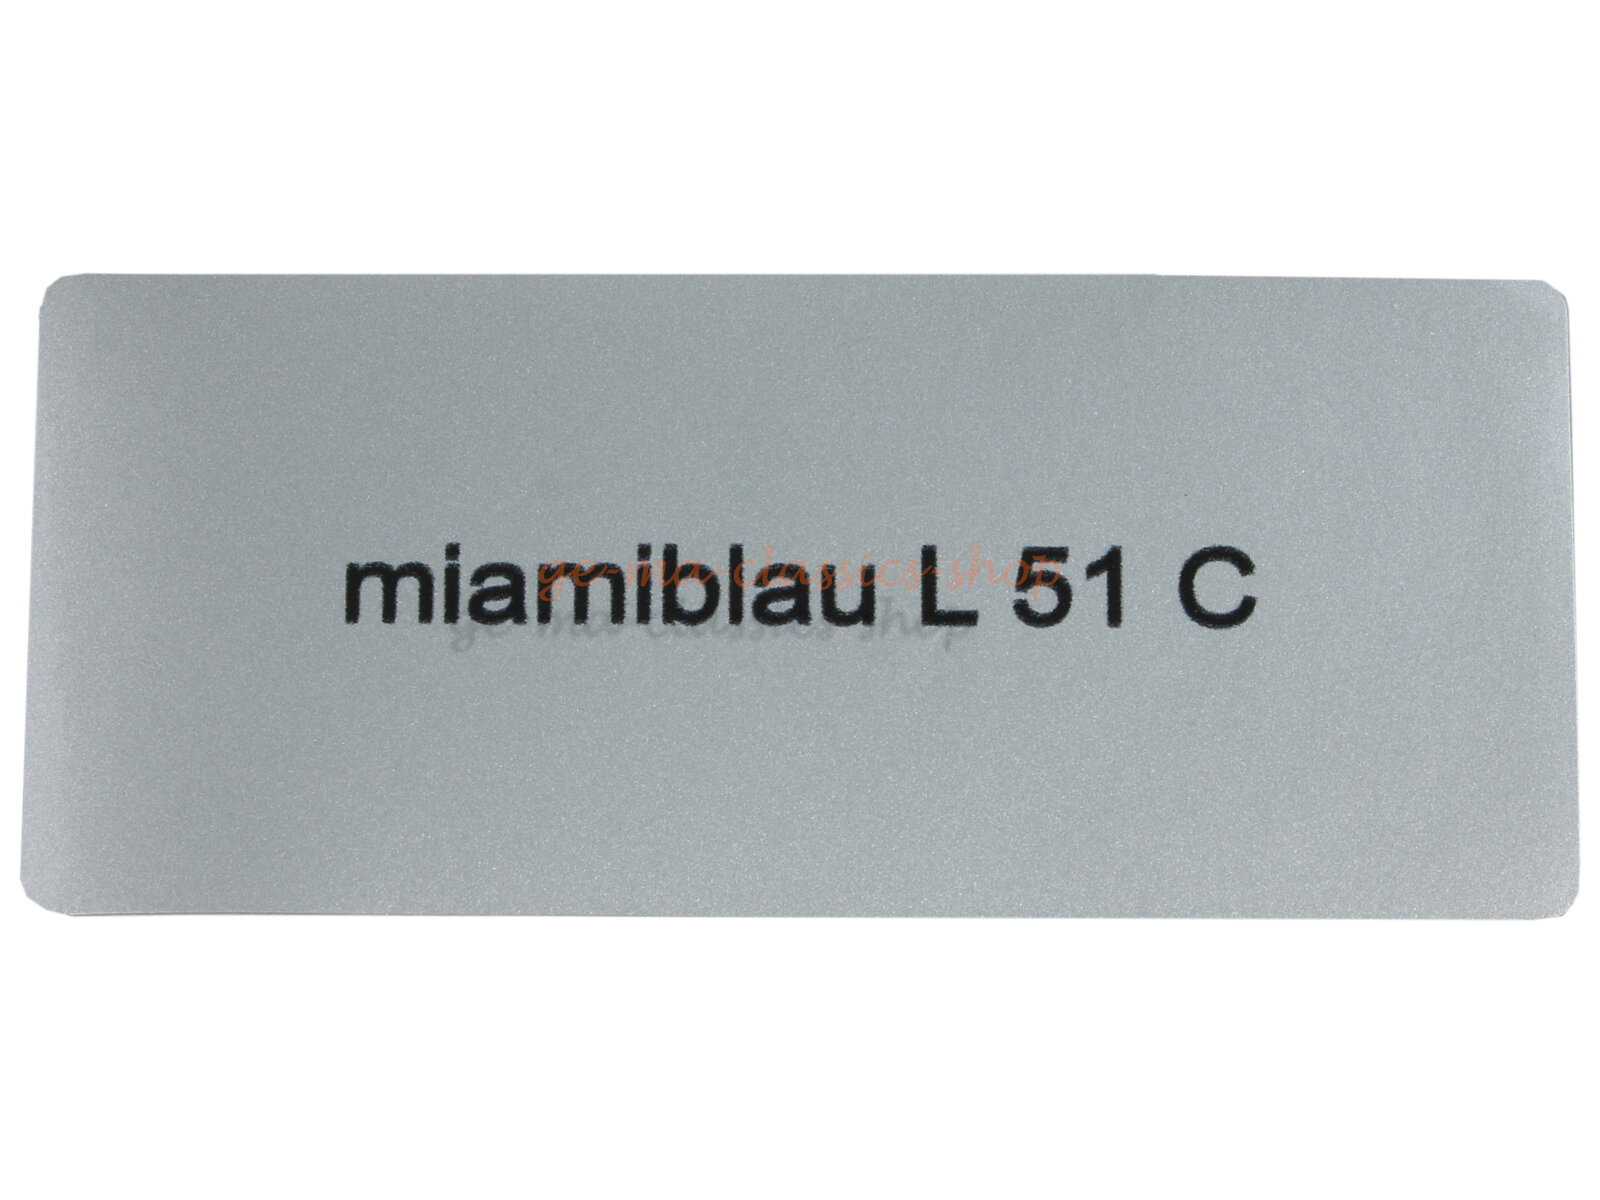 Aufkleber "miamiblau L 51 C" Farbcode Sticker